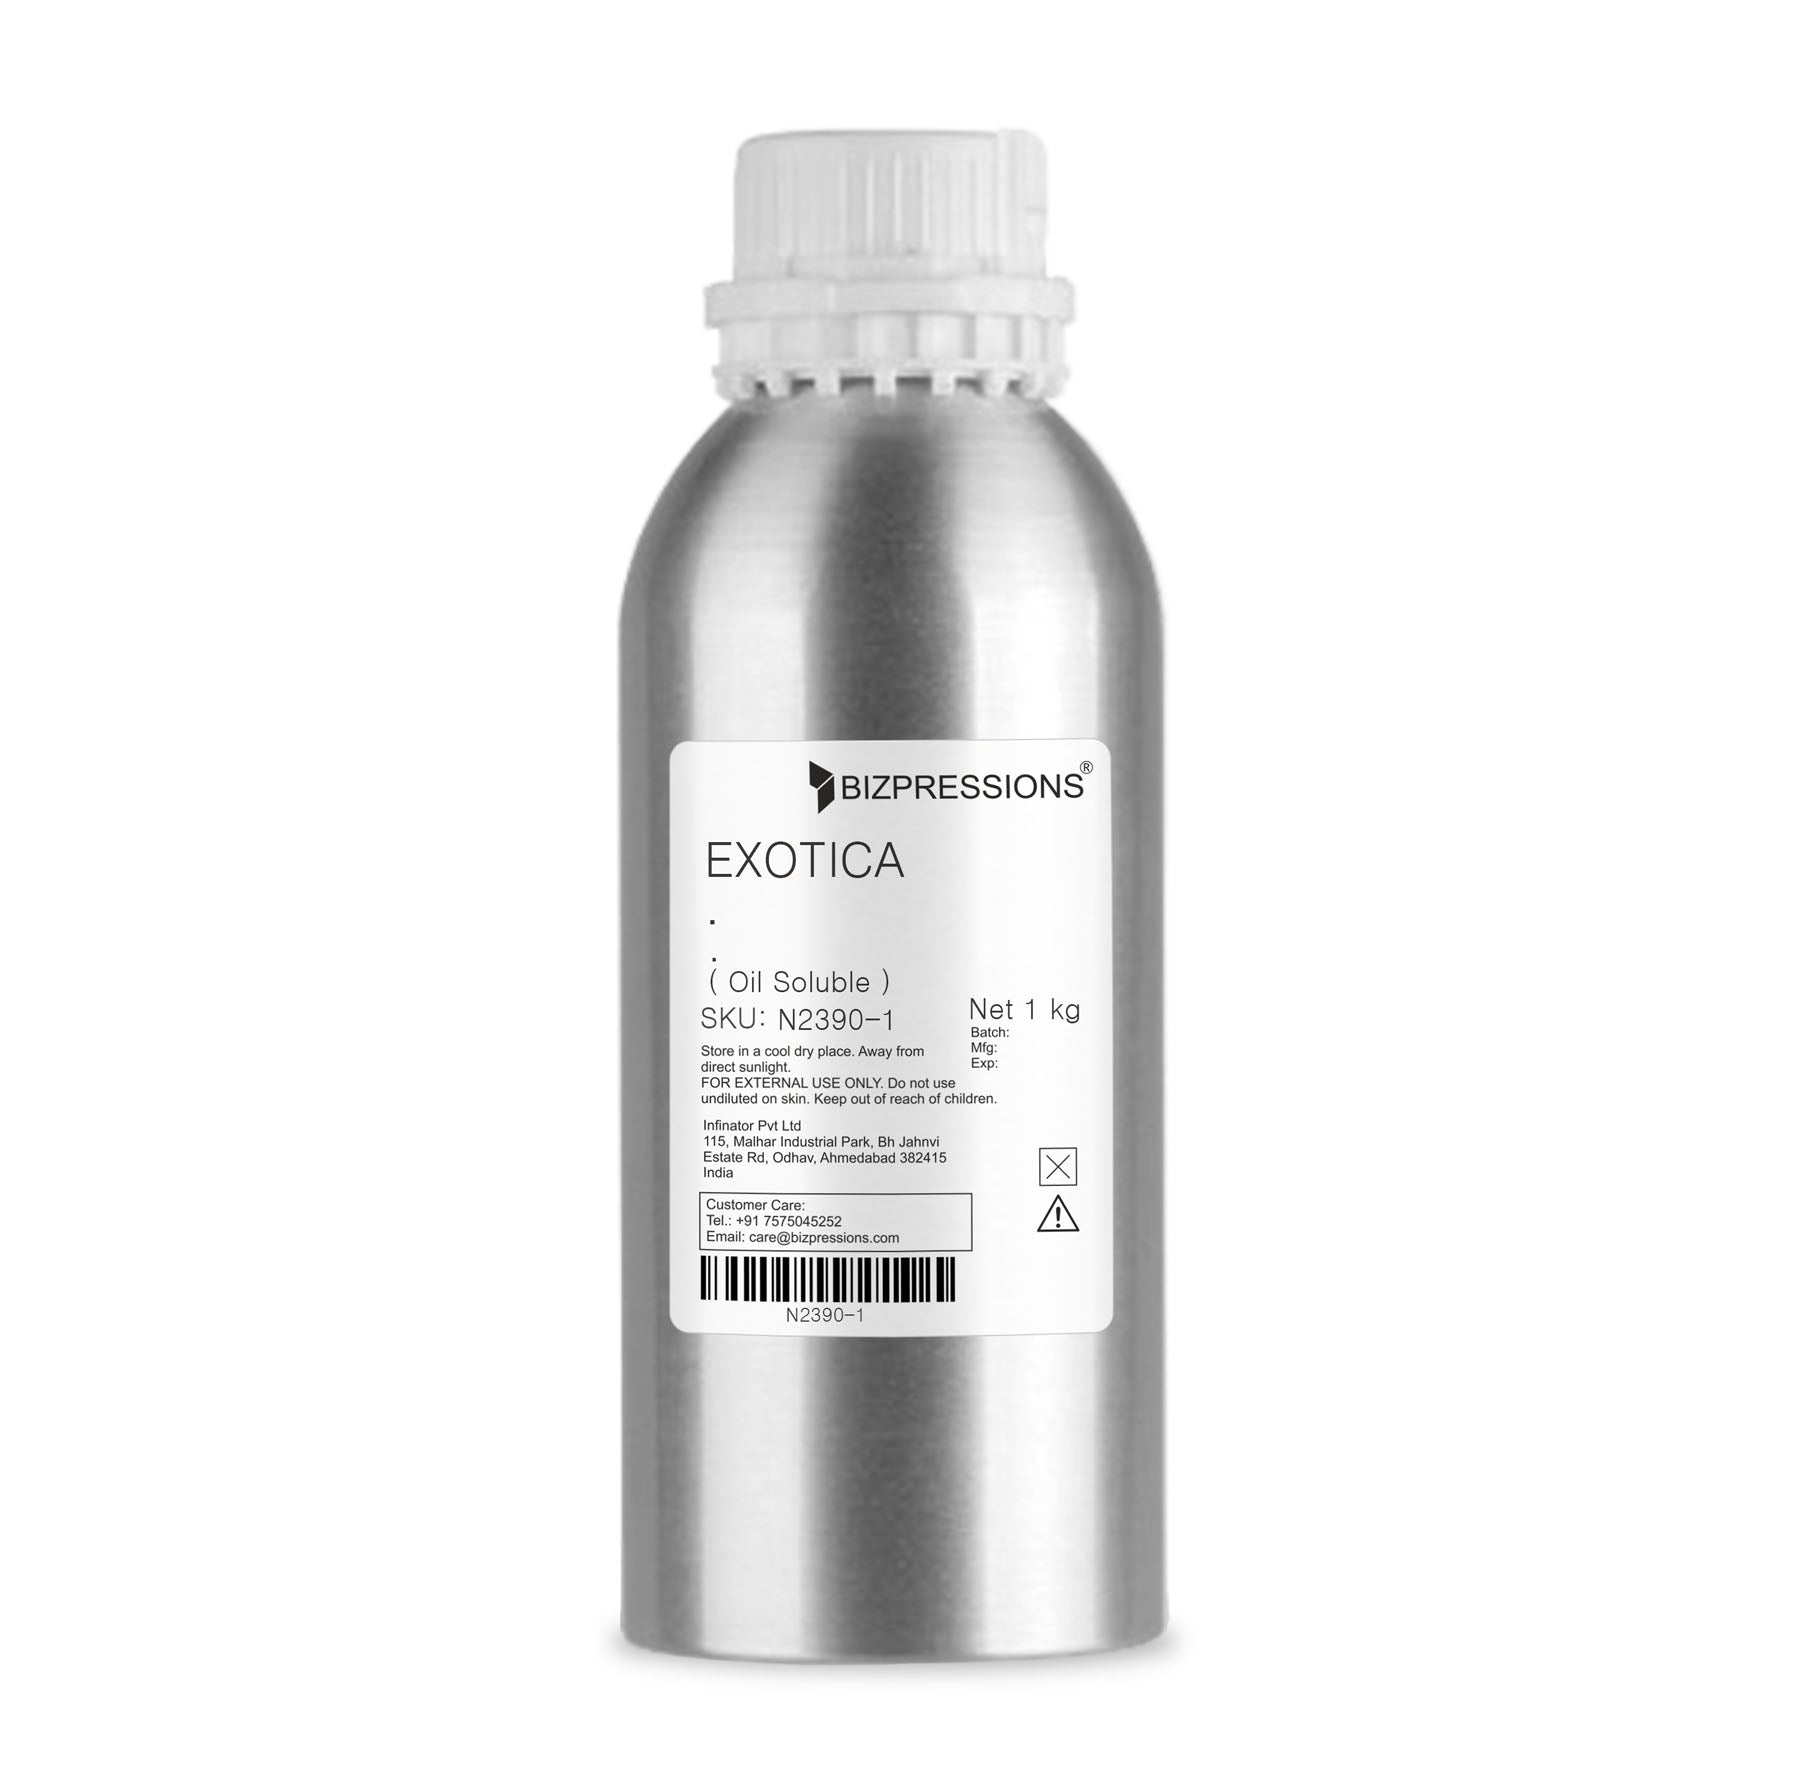 EXOTICA - Fragrance ( Oil Soluble ) - 1 kg